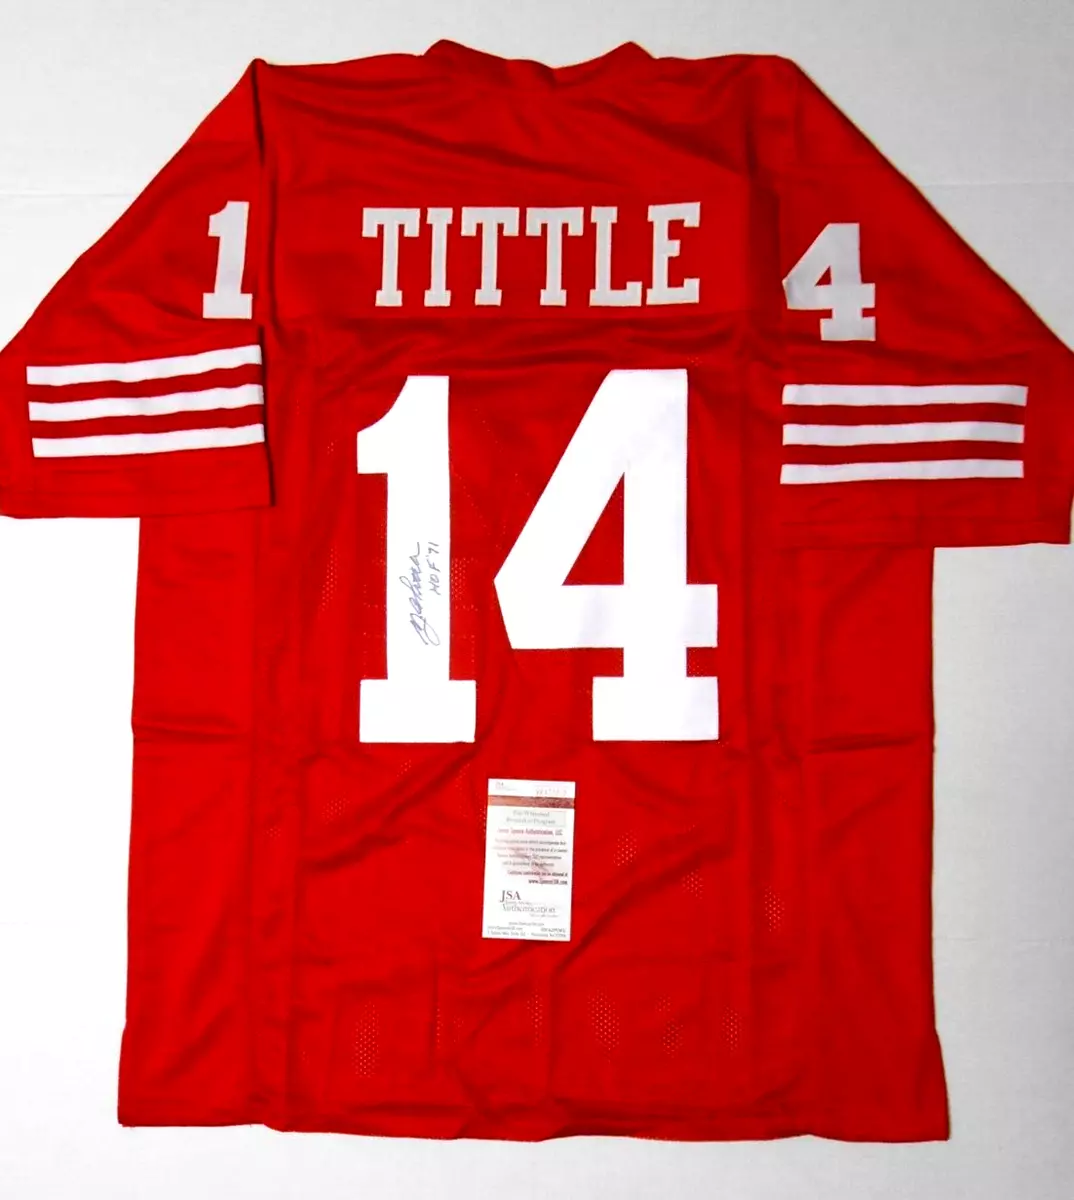 ya tittle 49ers jersey